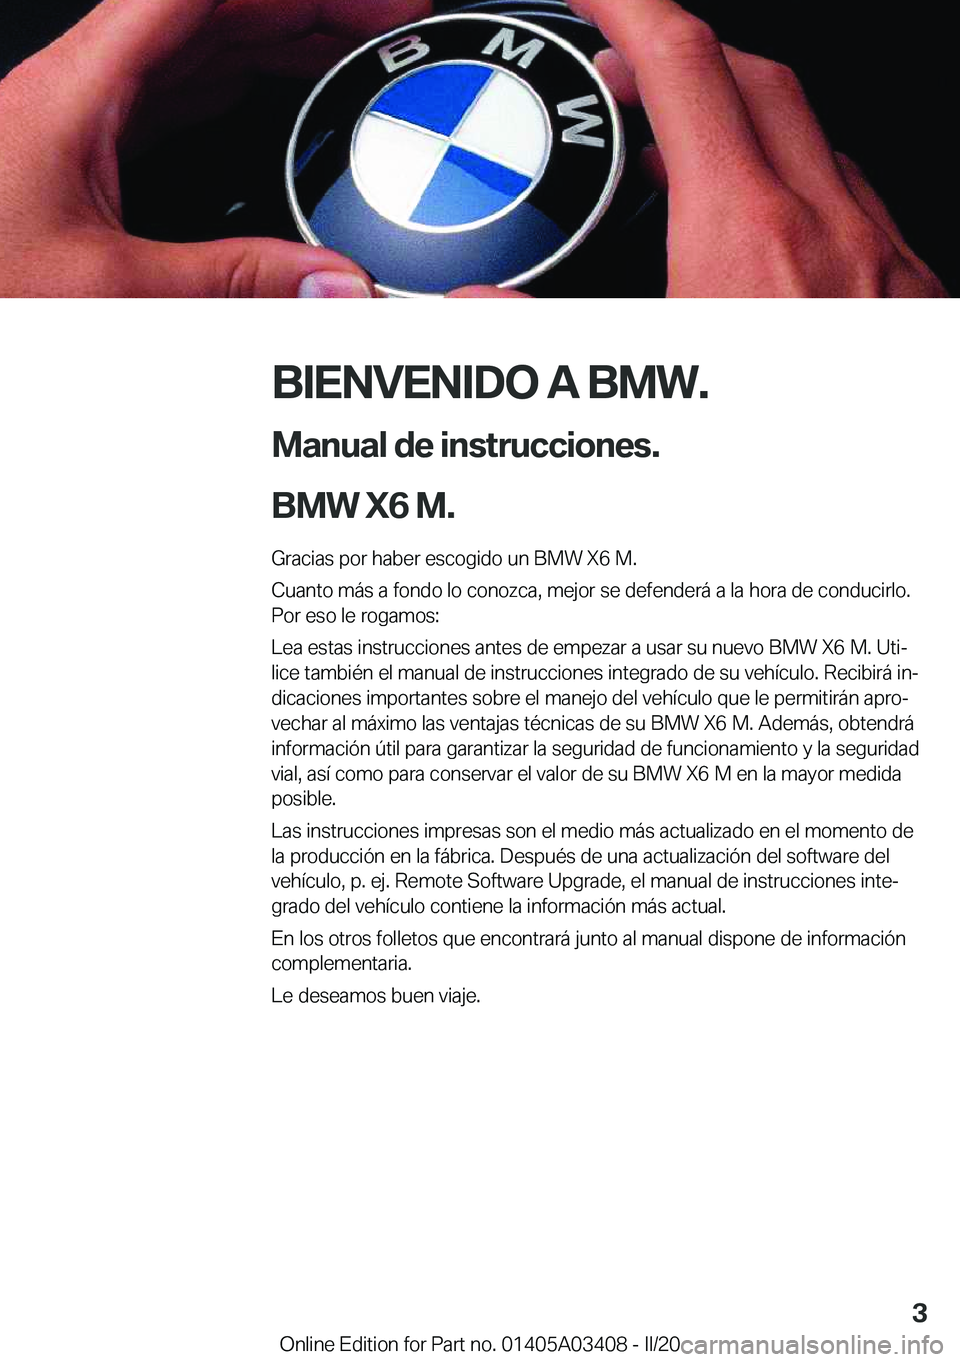 BMW X6 M 2020  Manuales de Empleo (in Spanish) �B�I�E�N�V�E�N�I�D�O��A��B�M�W�.
�M�a�n�u�a�l��d�e��i�n�s�t�r�u�c�c�i�o�n�e�s�.
�B�M�W��X�6��M�. �G�r�a�c�i�a�s��p�o�r��h�a�b�e�r��e�s�c�o�g�i�d�o��u�n��B�M�W��X�6��M�.
�C�u�a�n�t�o��m�